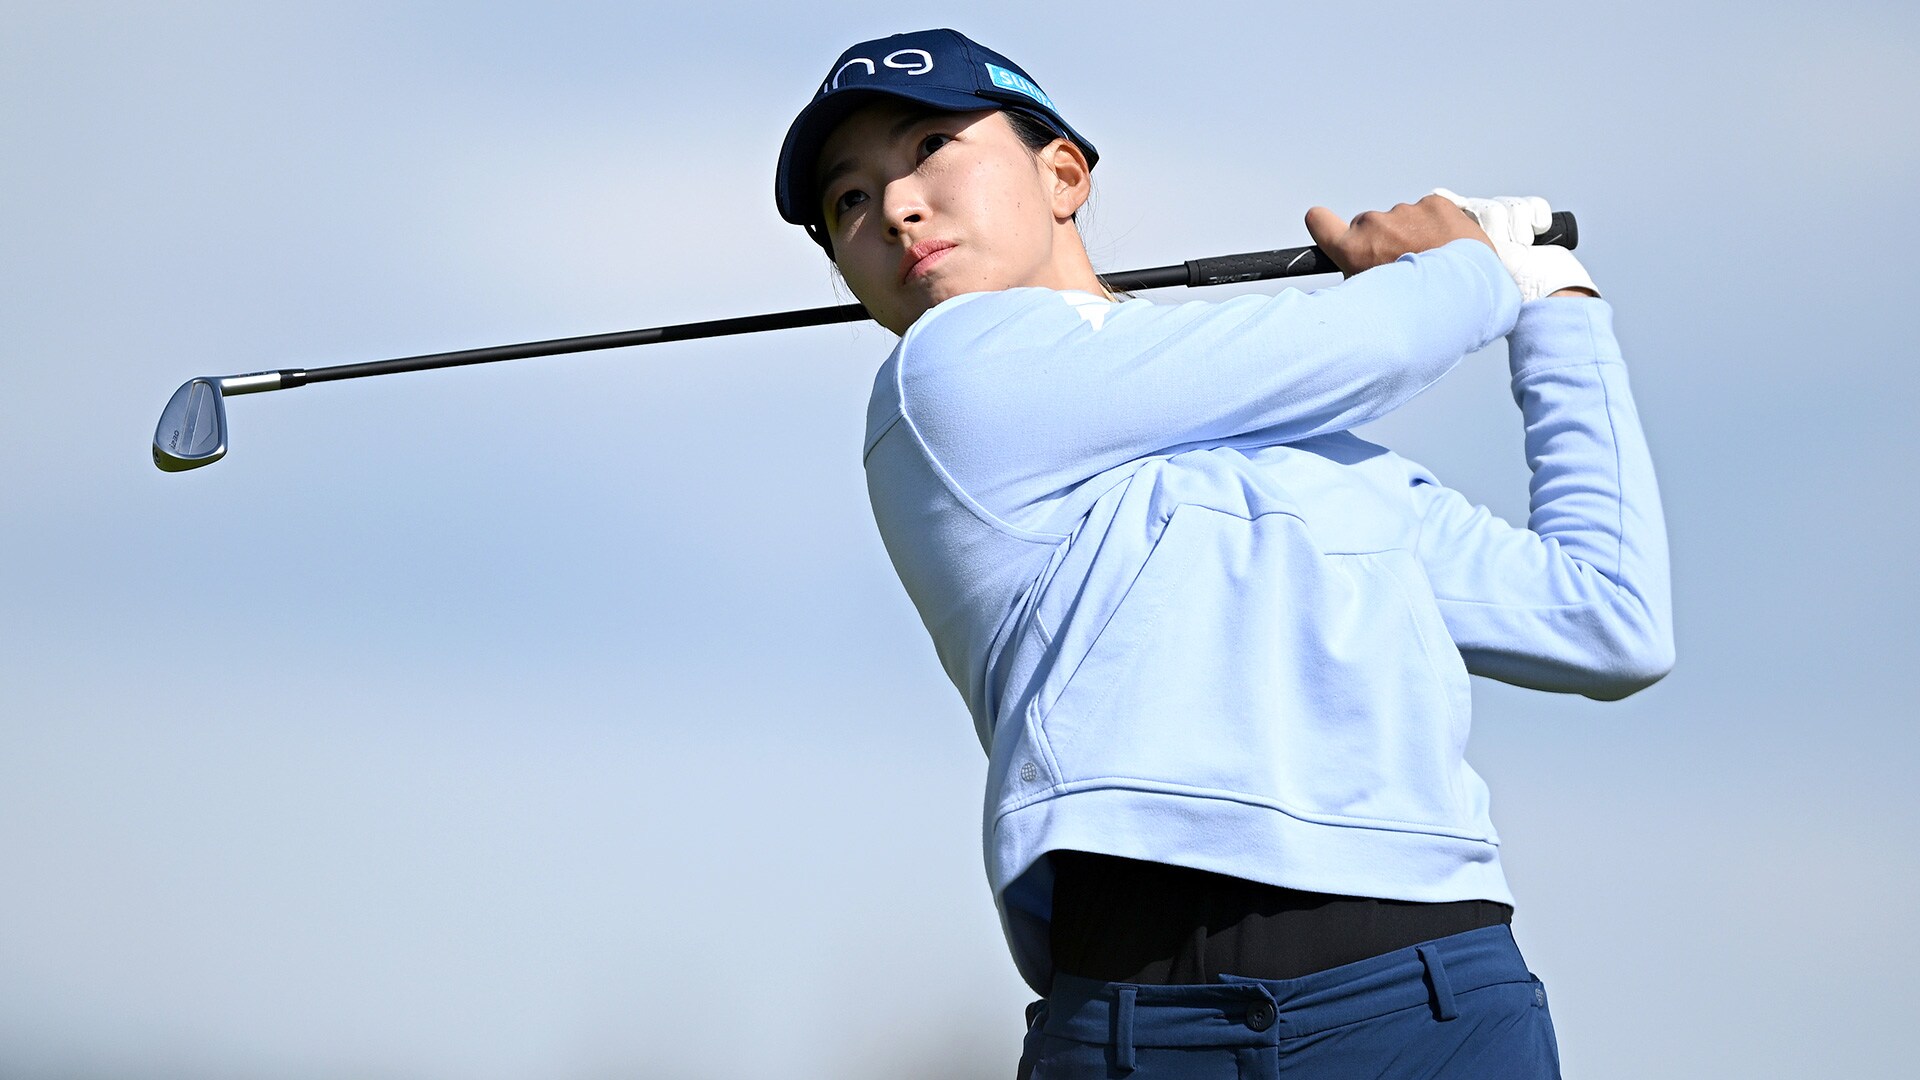 Hinako Shibuno shoots 64 to take early lead at Women’s Scottish Open